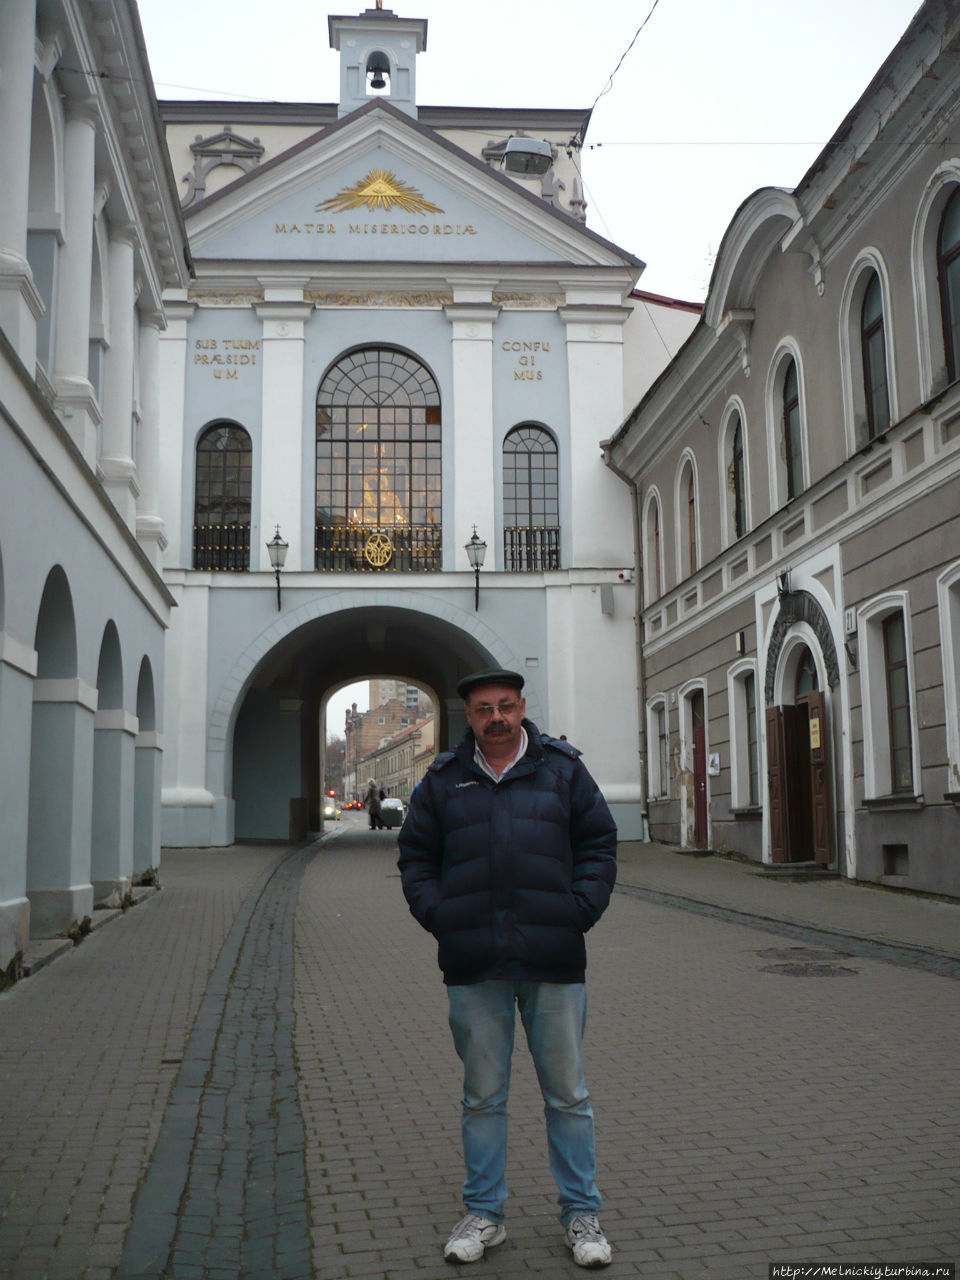 Остробрамские ворота Вильнюс, Литва